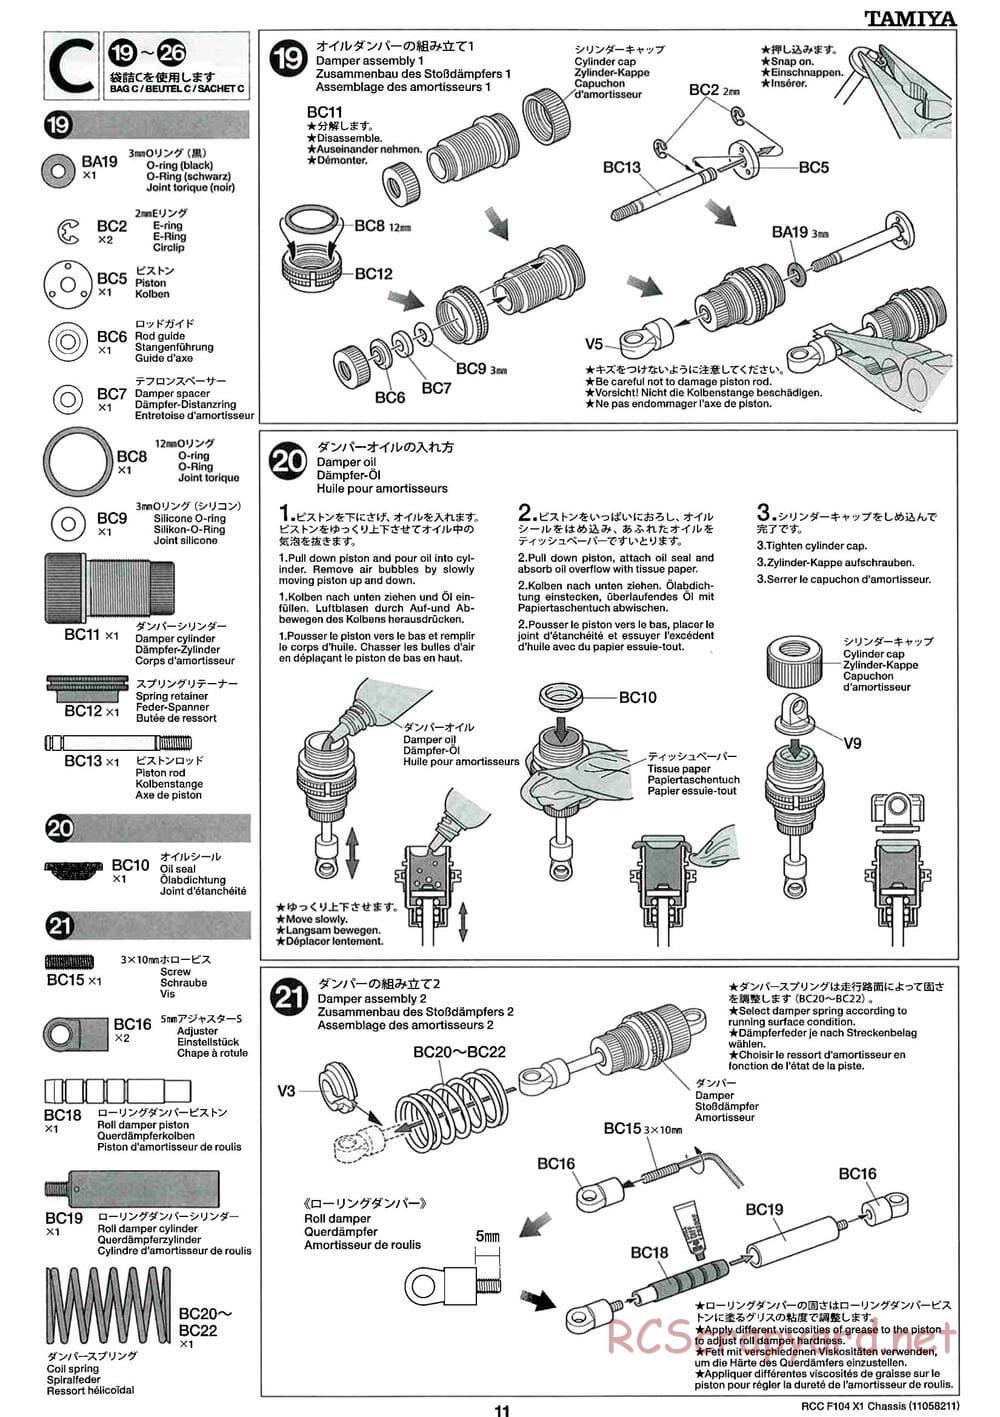 Tamiya - F104X1 Chassis - Manual - Page 11